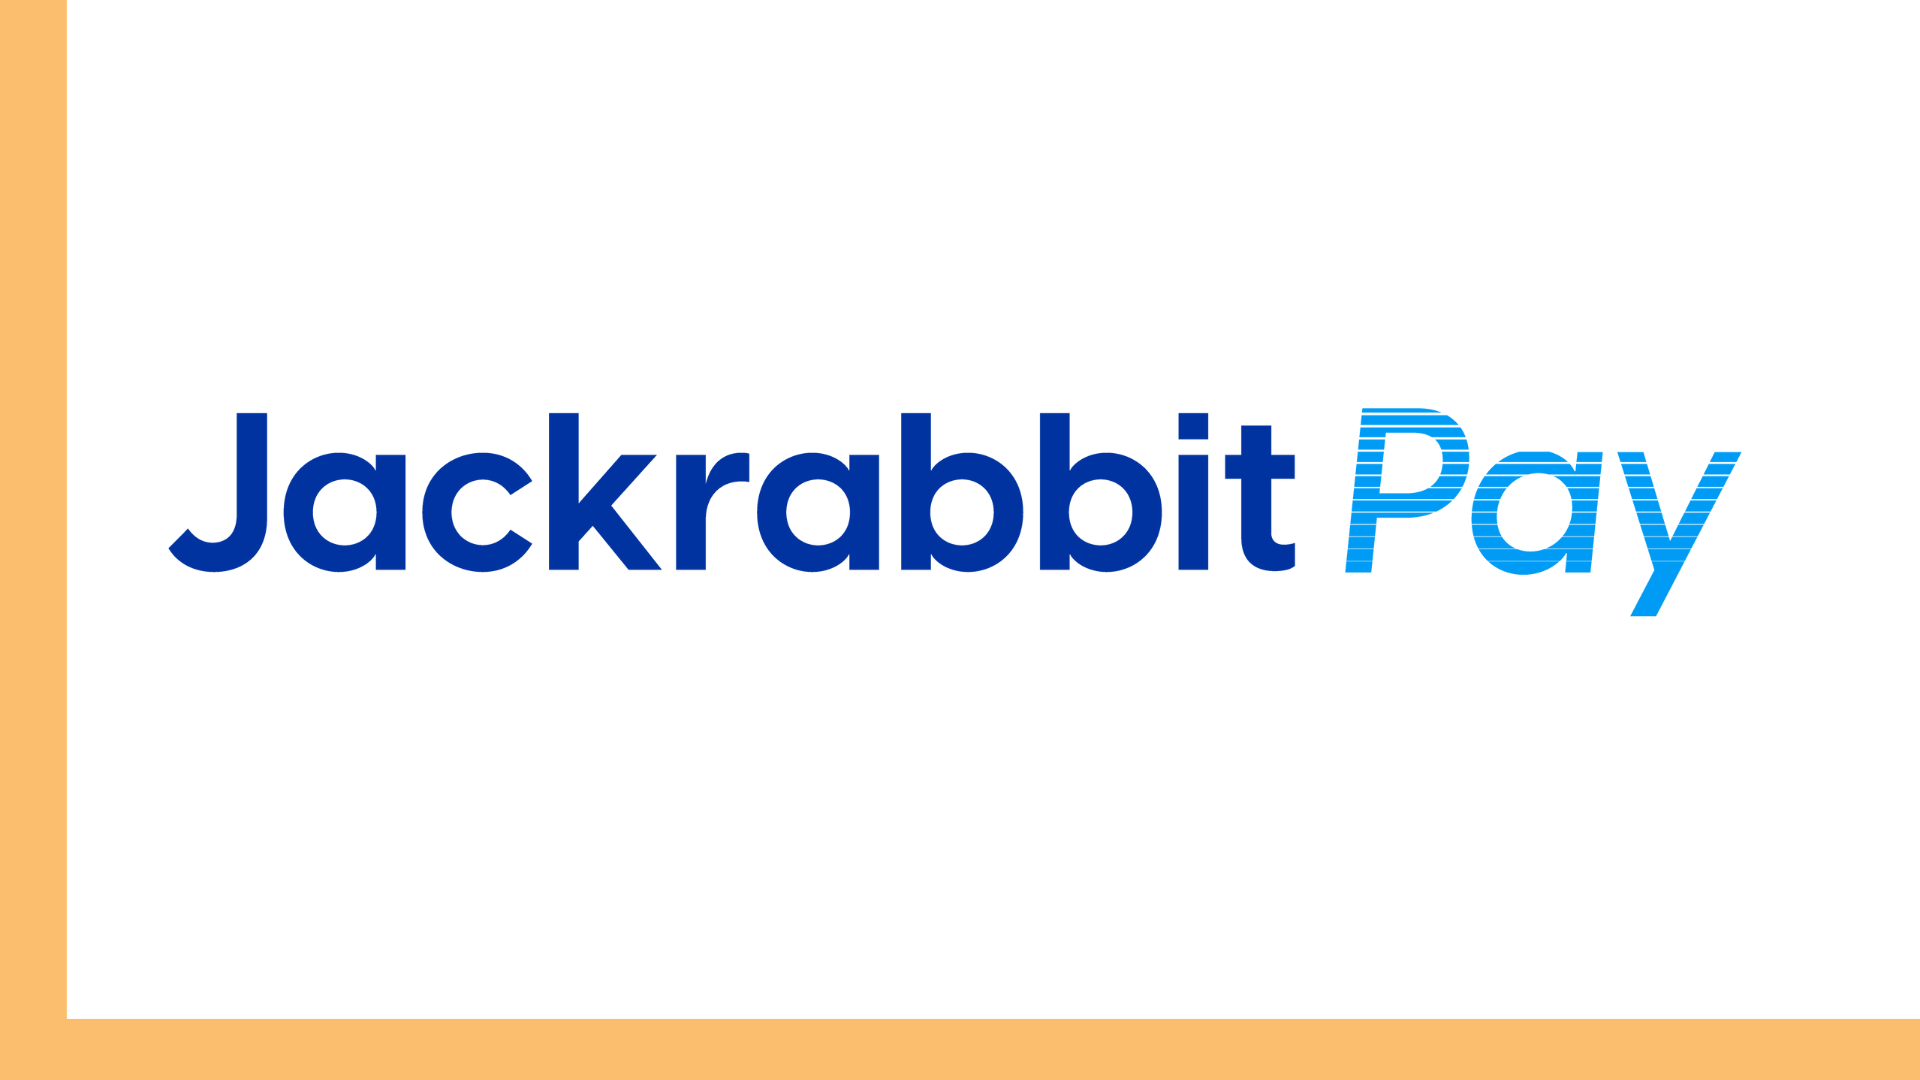 Jackrabbit Pay Jackrabbit integration partner